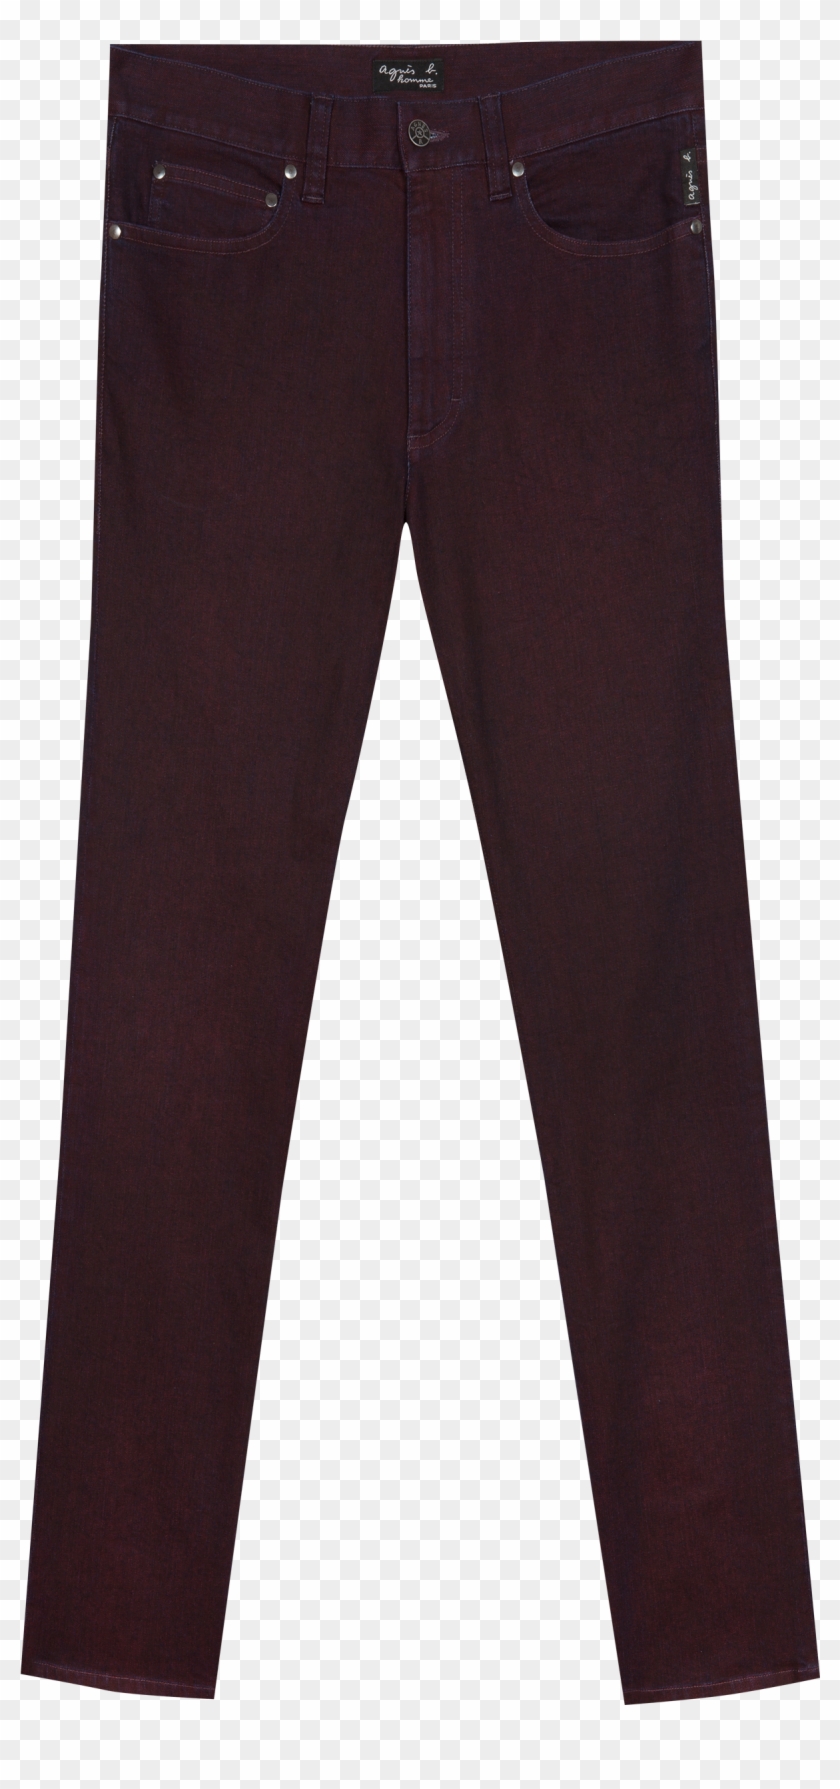 Jean Rock - Trousers Clipart #4013160